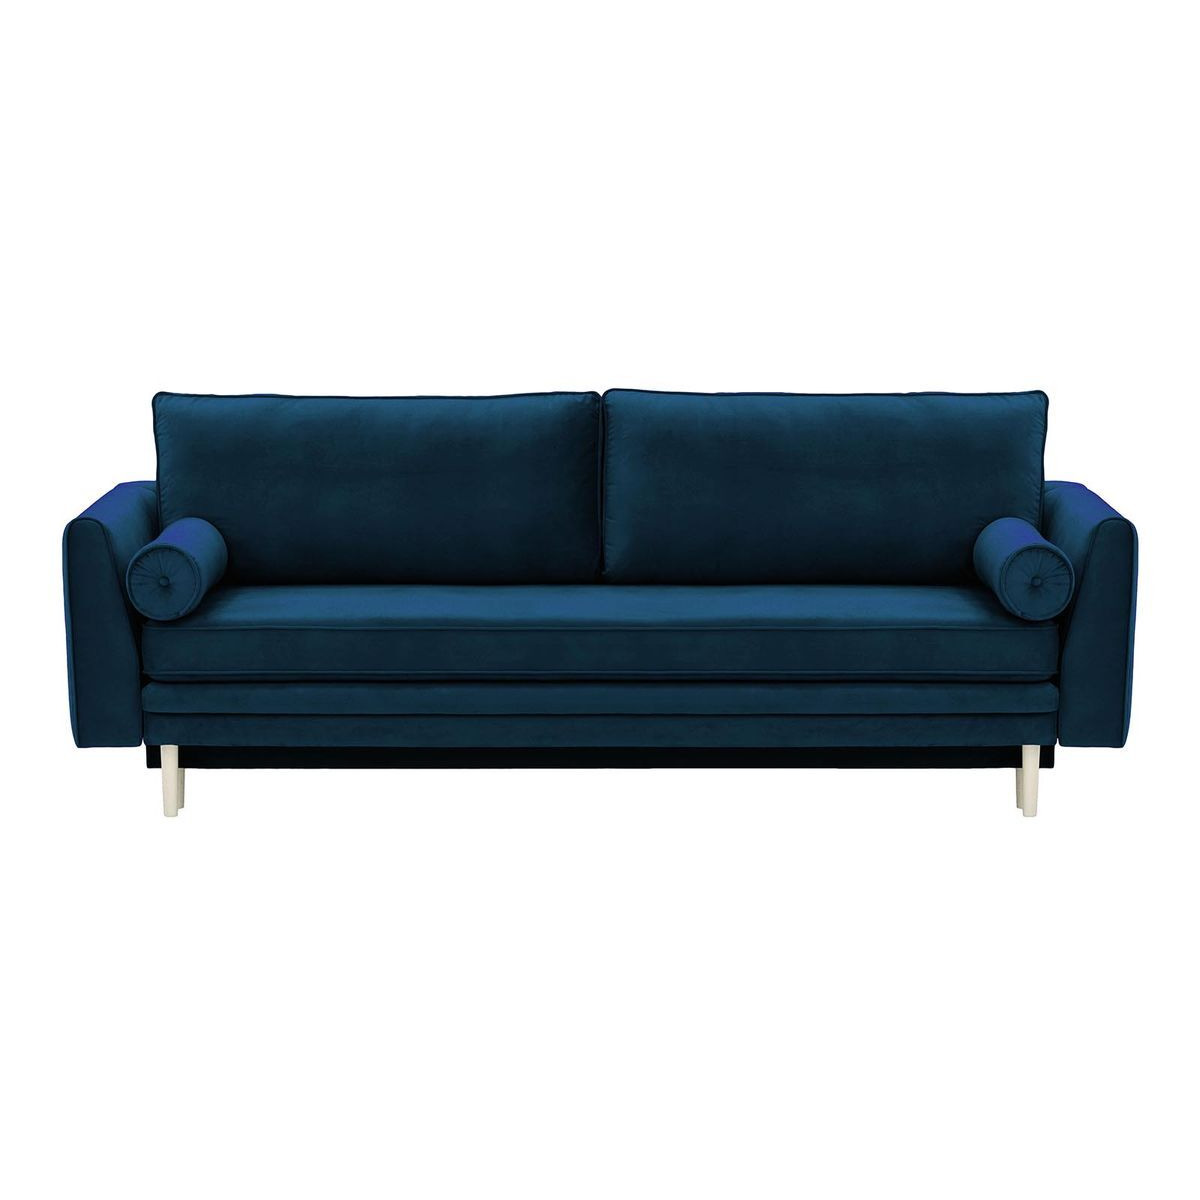 Boris Sofa Bed with Storage, blue, Leg colour: white - image 1